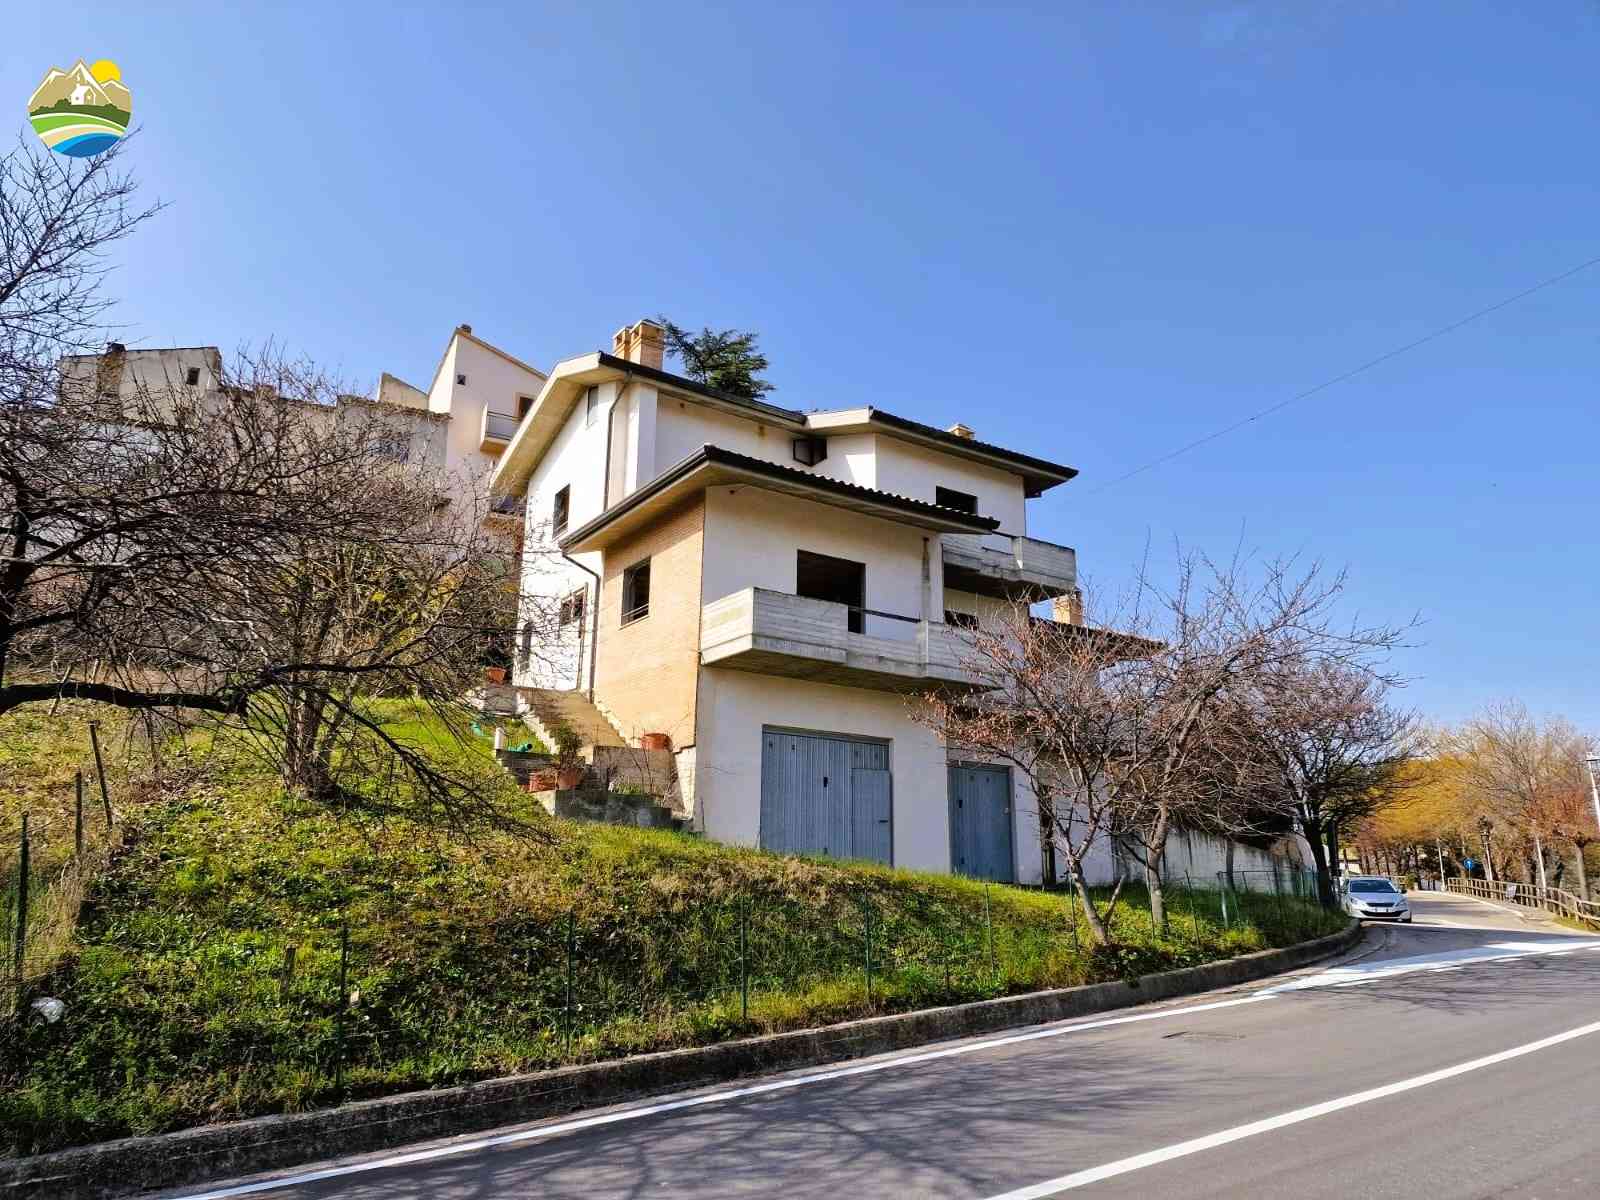 Villa Villa in vendita Castilenti (TE), Villa Mandorlo - Castilenti - EUR 129.969 730